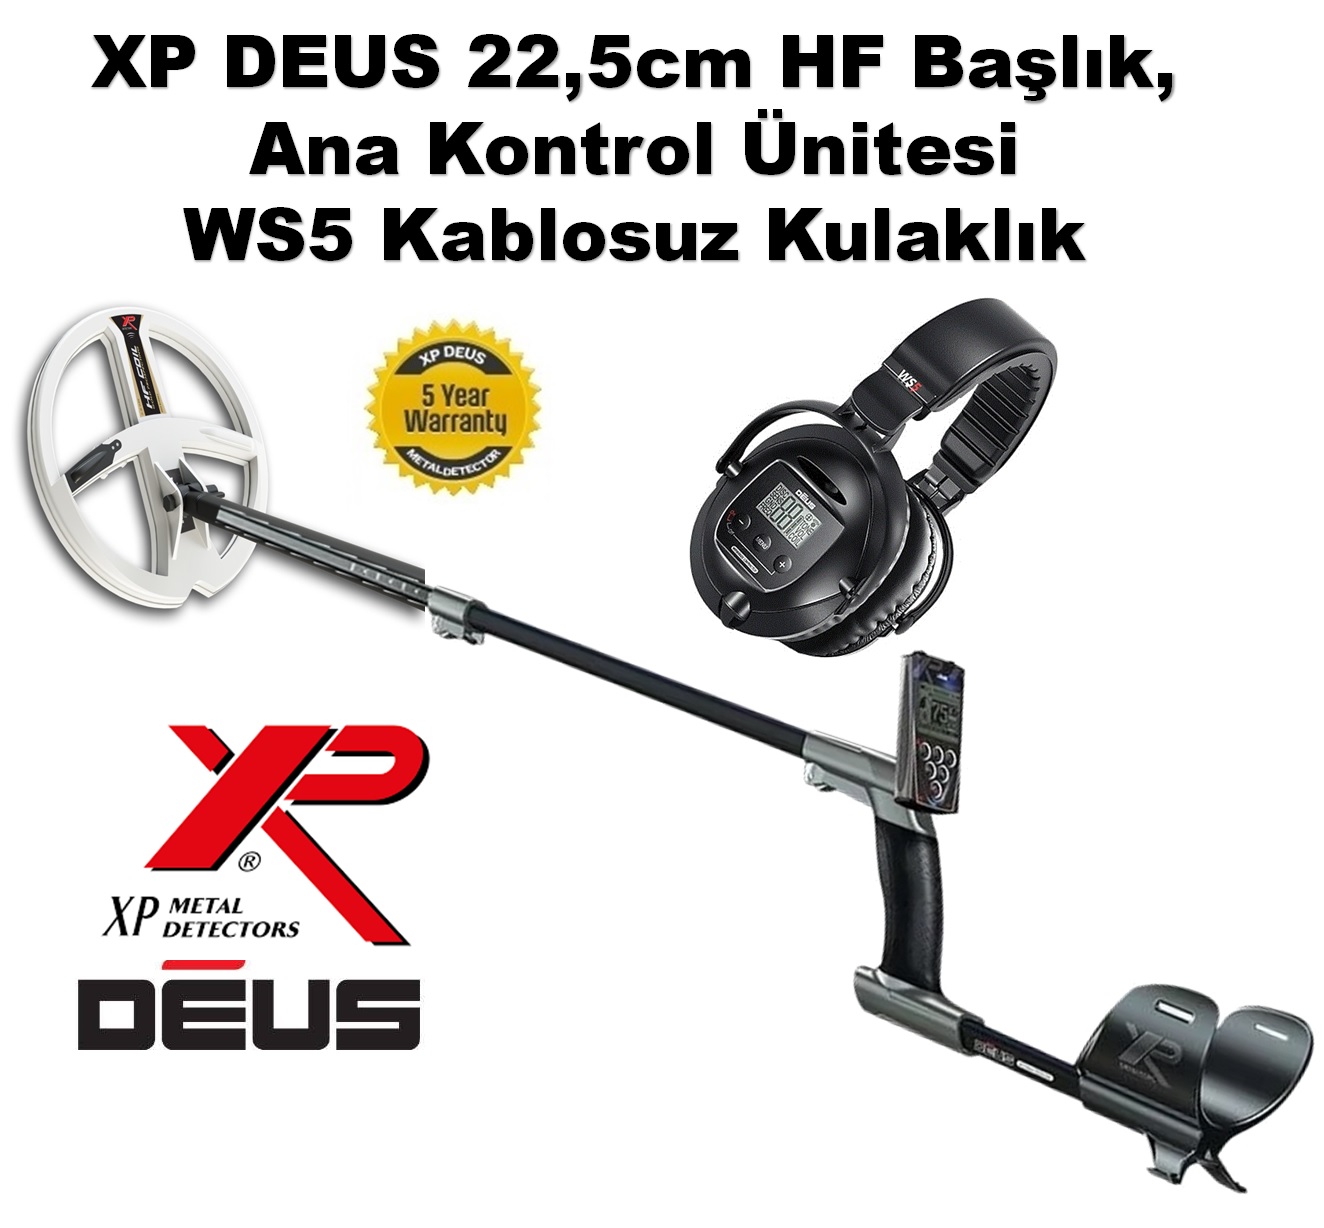 XP DEUS - 22,5cm HF Başlık, Ana Kontrol Ünitesi (RC), WS5 Kulaklık, FULL PAKET